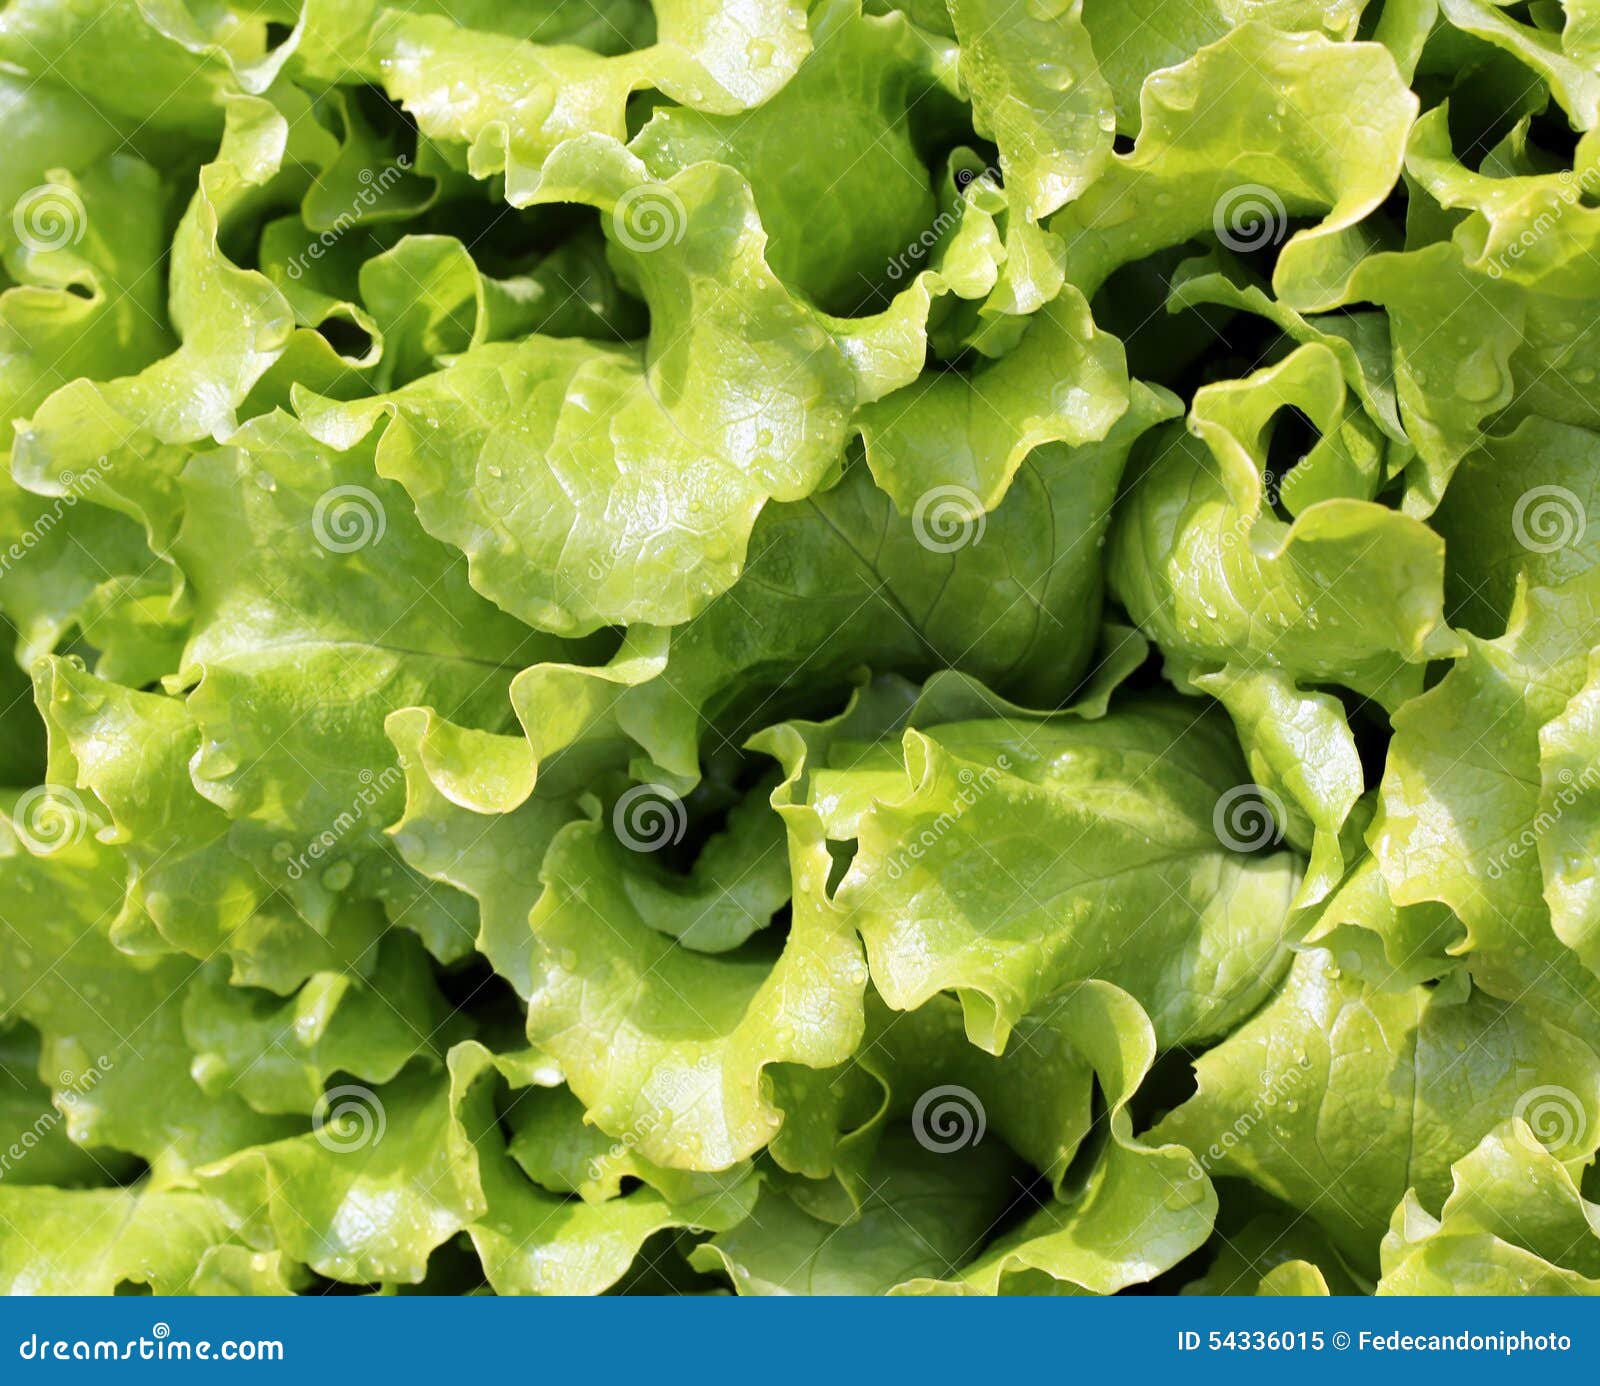 background of fresh green salad